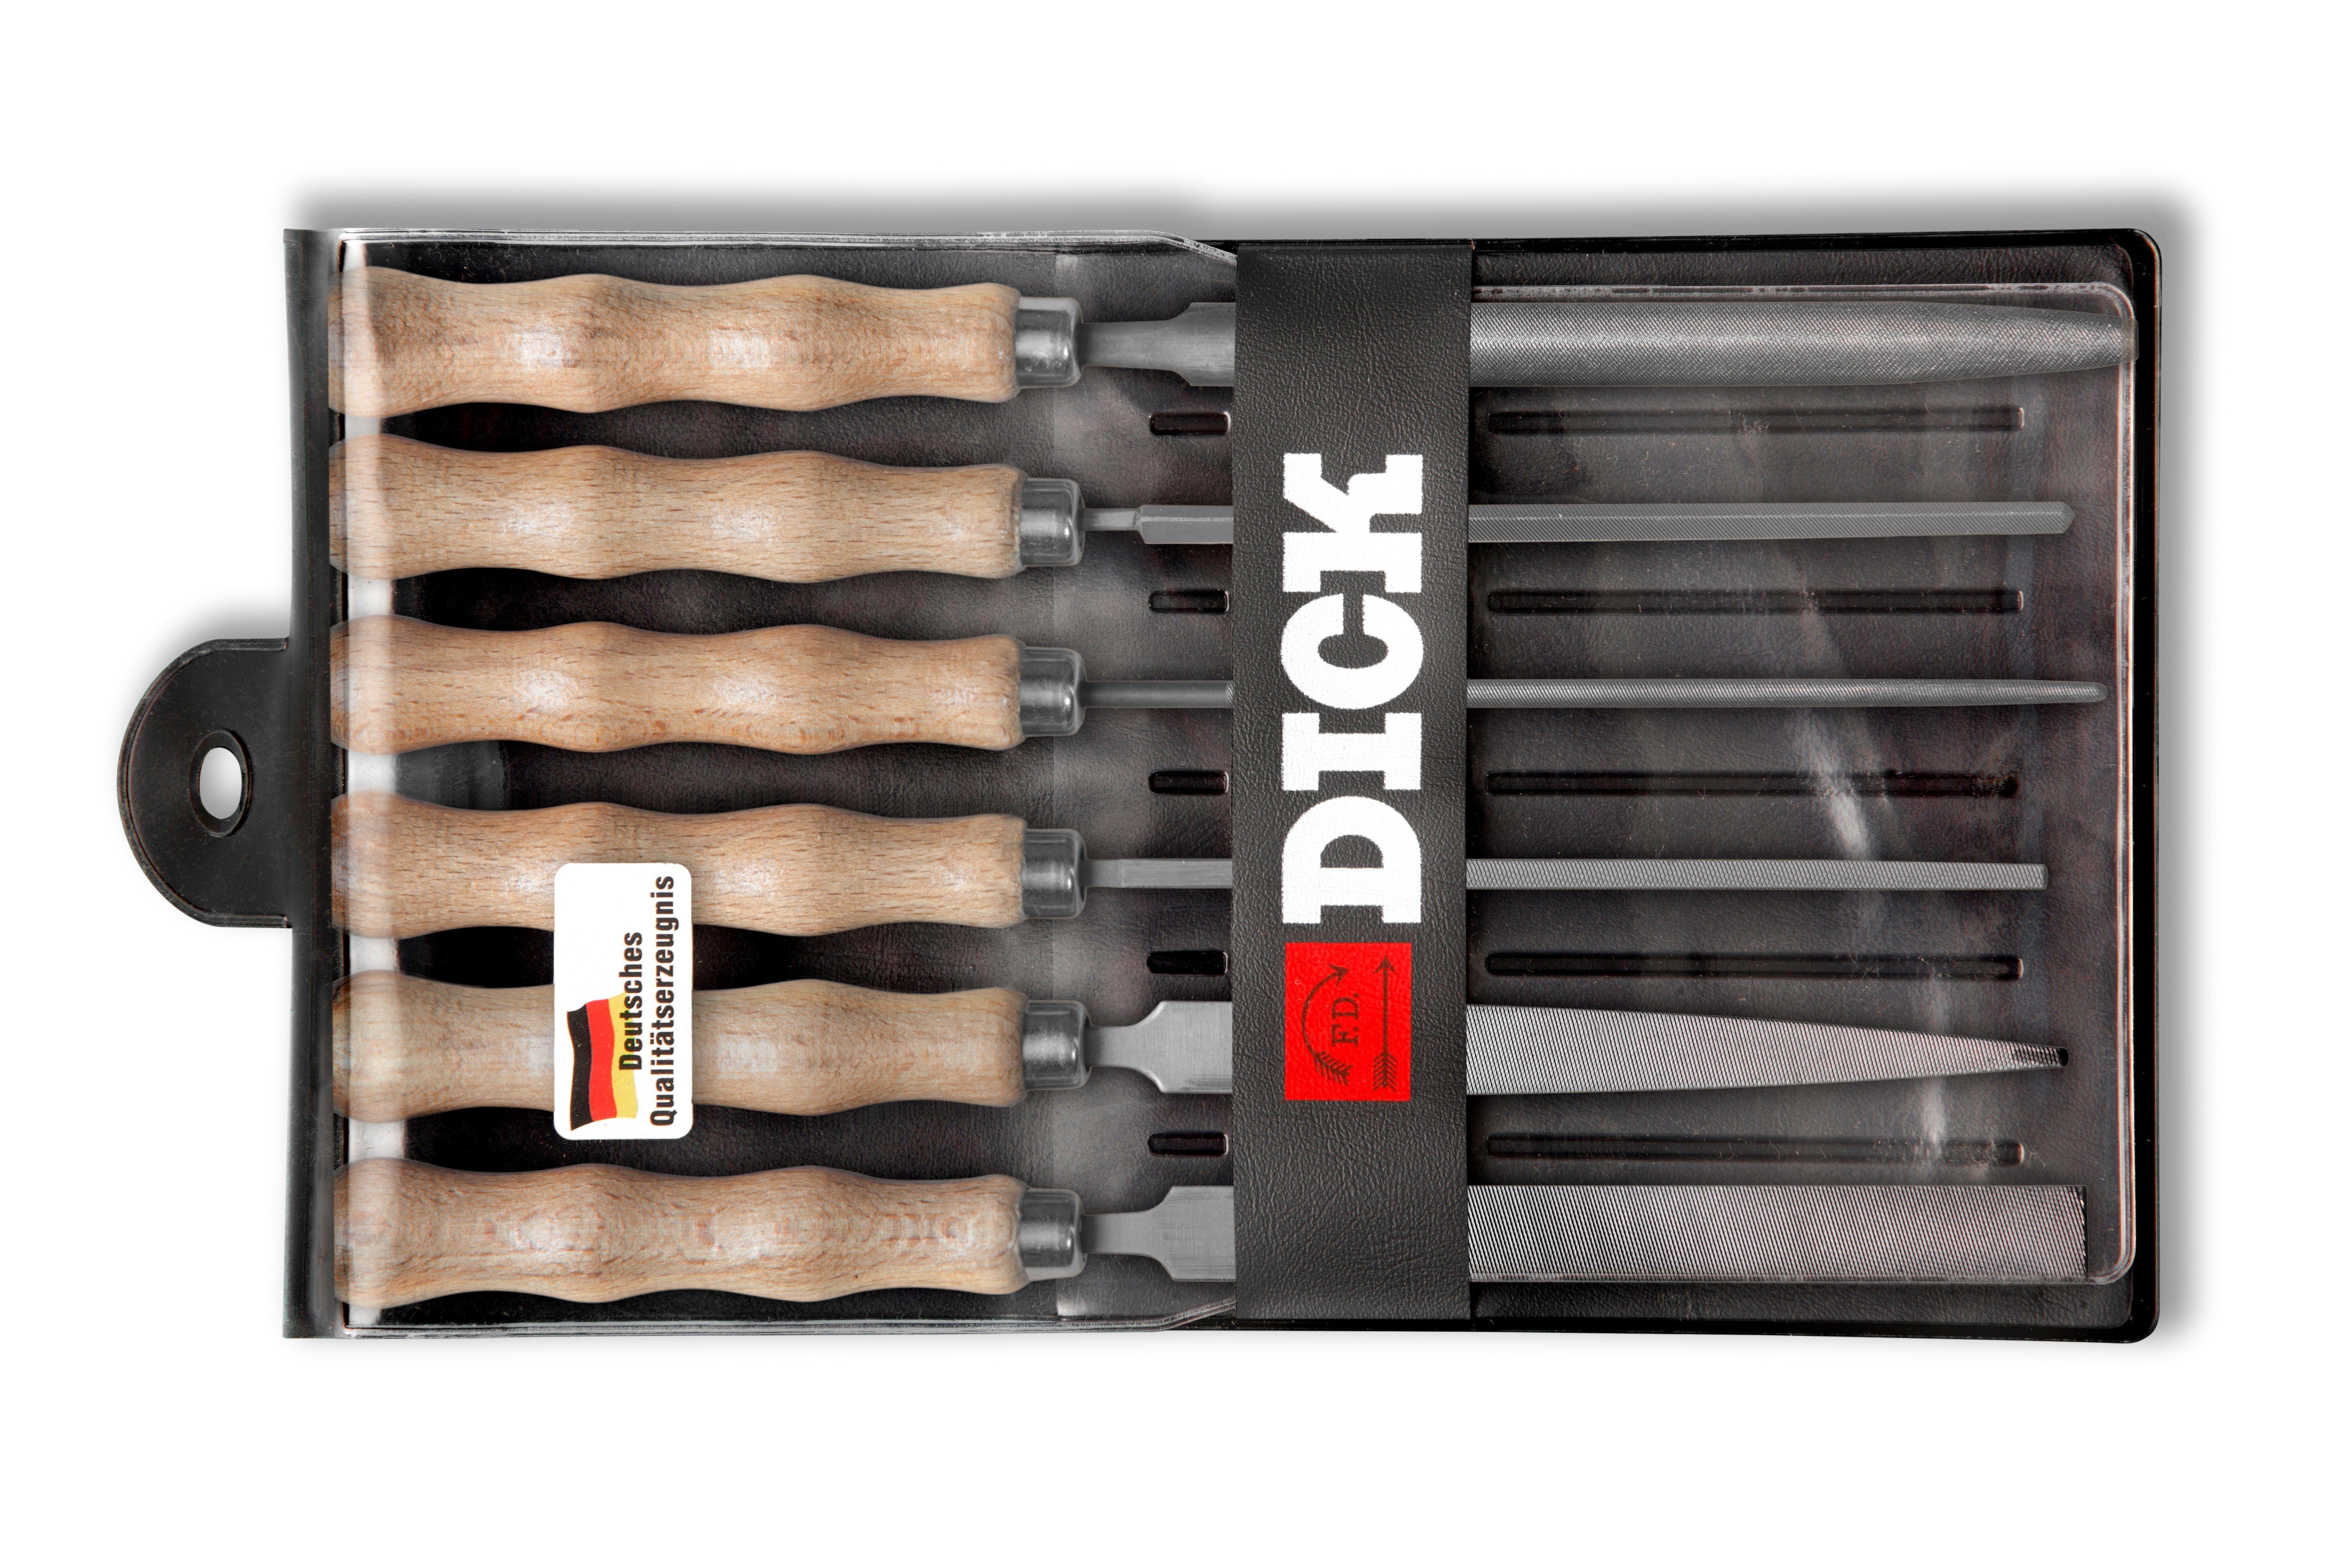 F. DICK Schlüsselfeile F. DICK Schlüsselfeilensatz 6-teilig 100 mm Feilen mit Holzgriff | Feilen